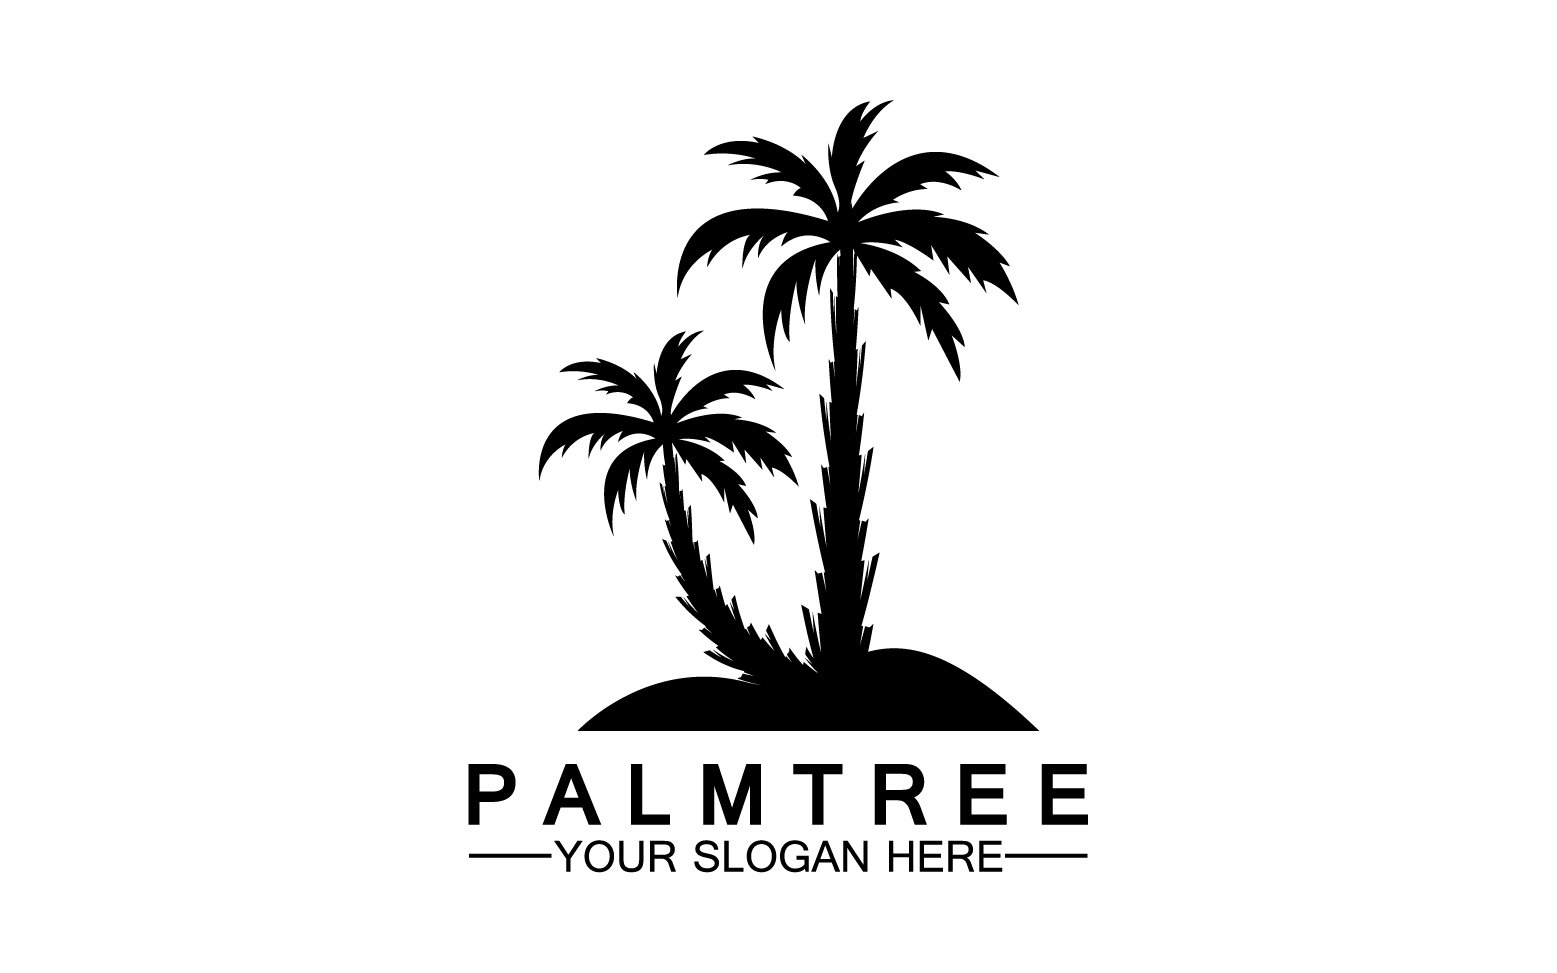 Palm tree hipster vintage logo vector icon illustration v5